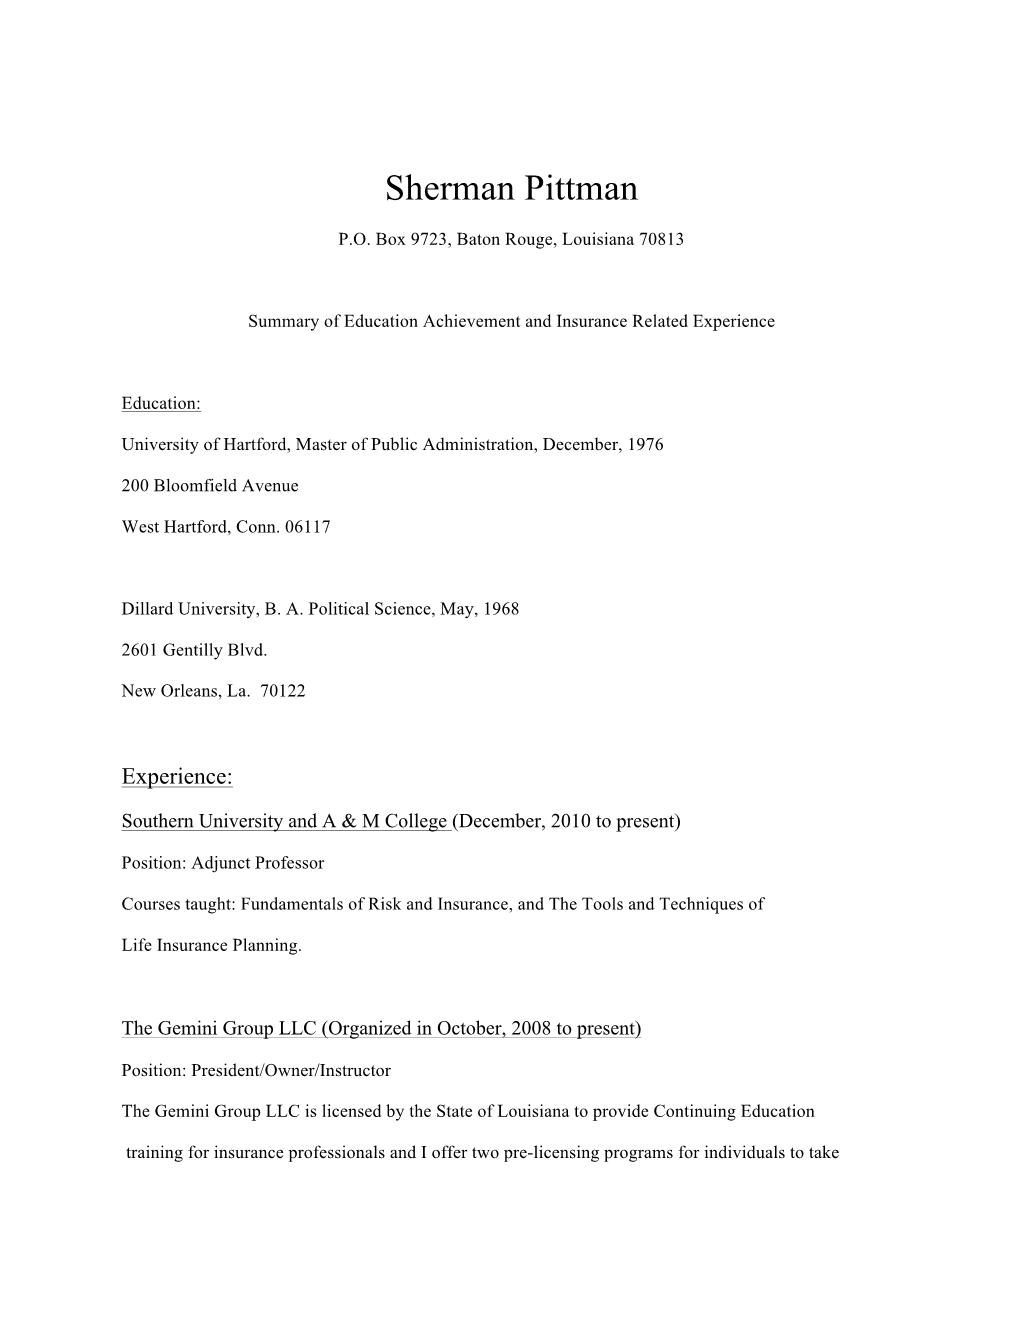 Professor Sherman Pittman